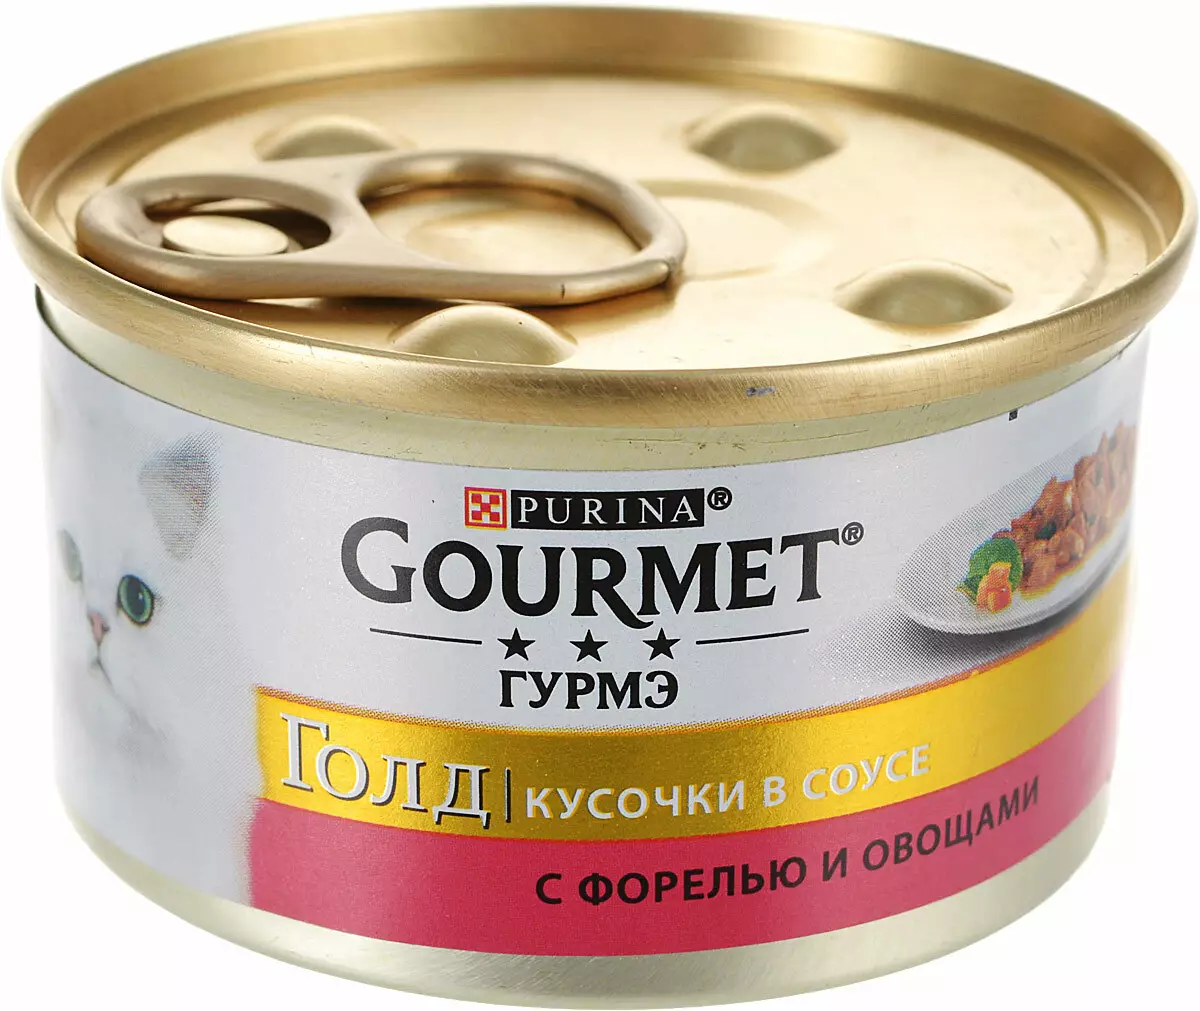 Gourmet: อาหารแมวและลูกแมว Purina, Pates เปียกและอาหารกระป๋องอื่น ๆ องค์ประกอบของพวกเขาความคิดเห็น 22711_23